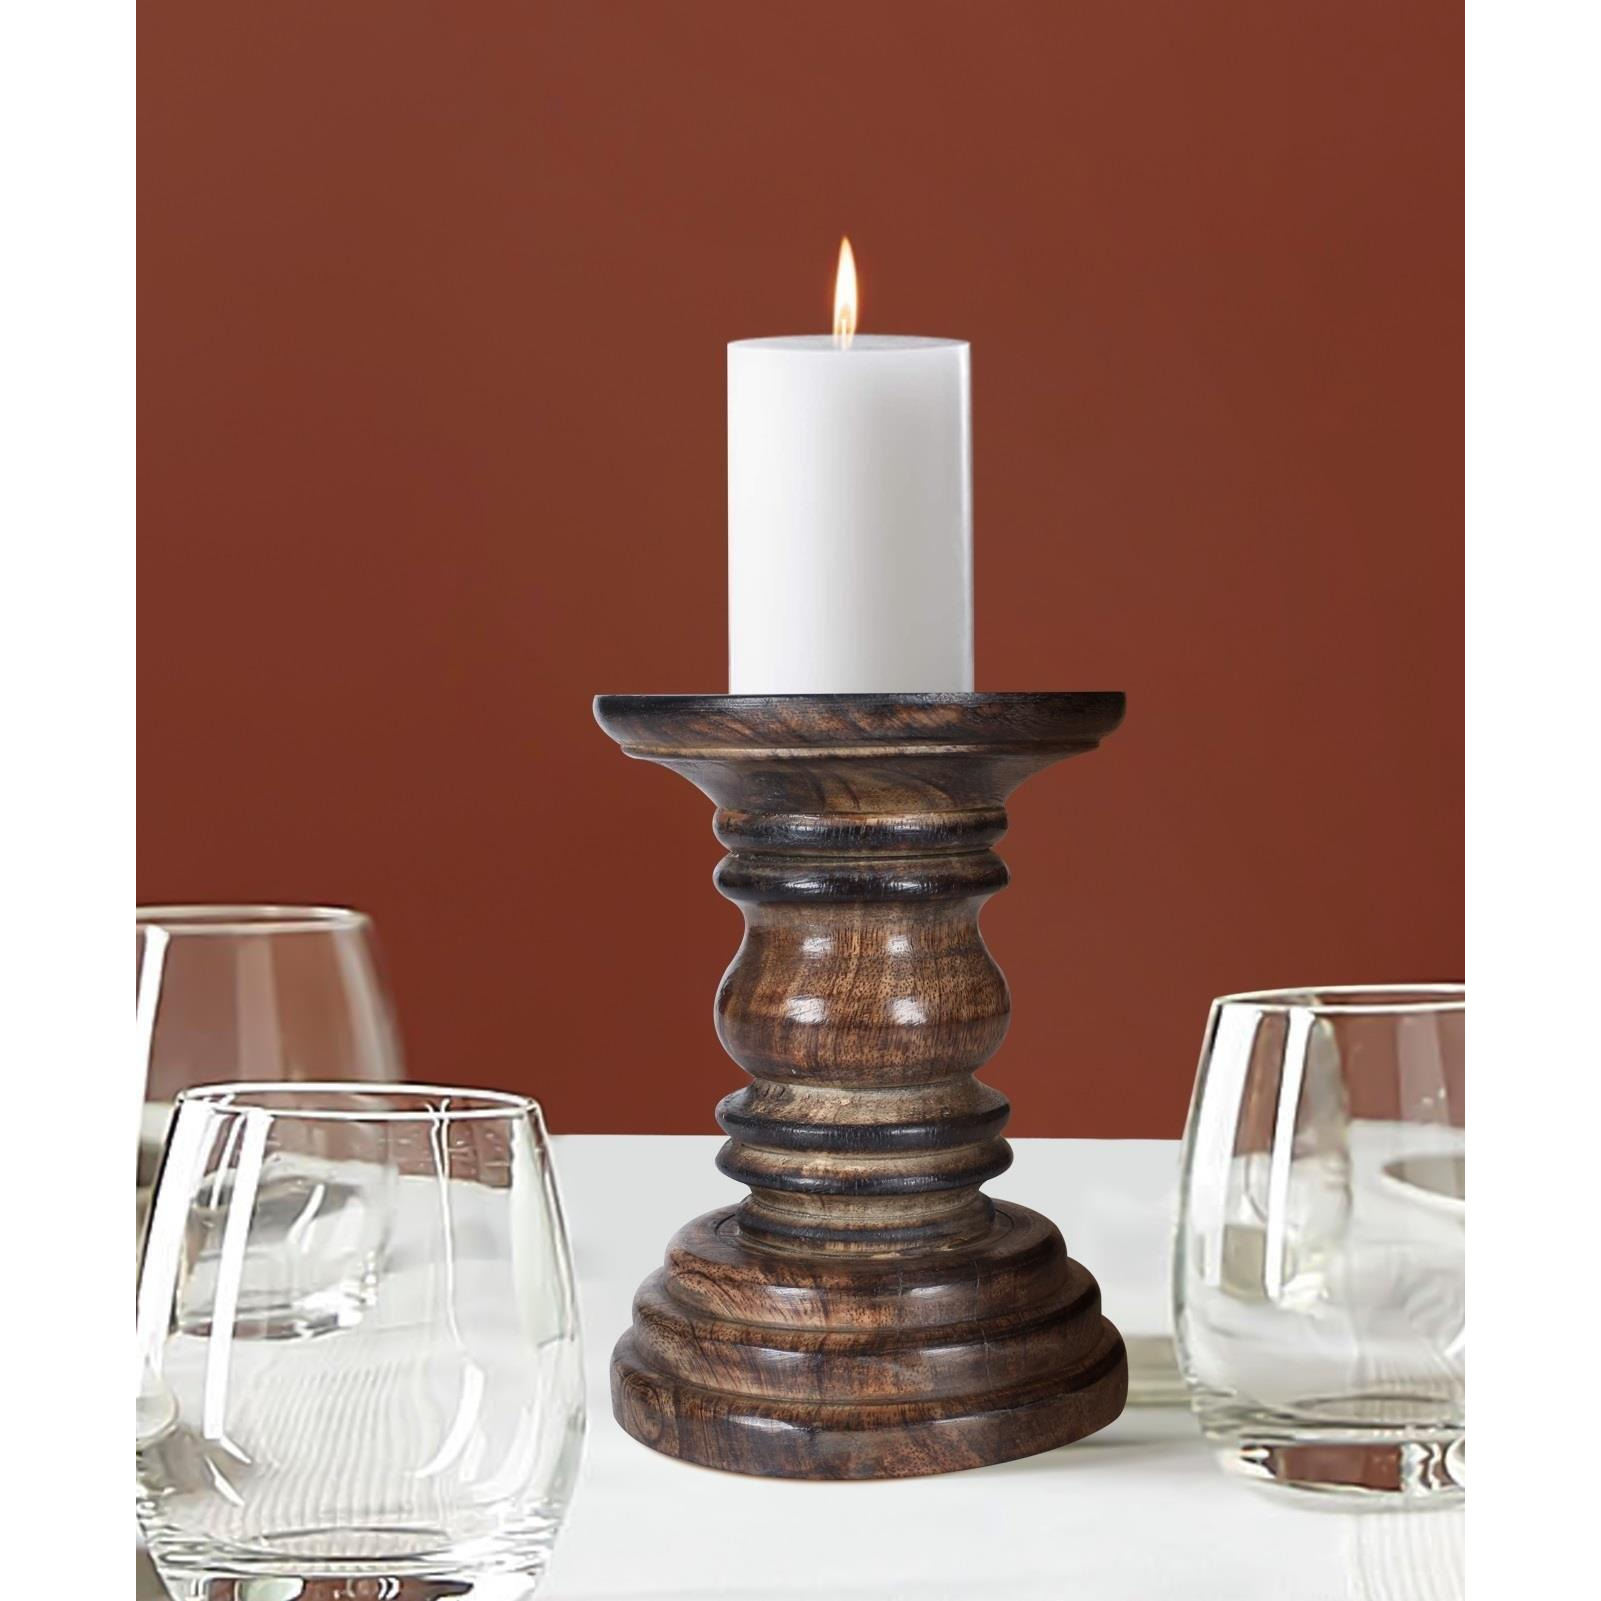 SET OF 2 Rustic Antique Carved Wooden Pillar Church Candle Holder,White Light,Medium 19cm - image 1